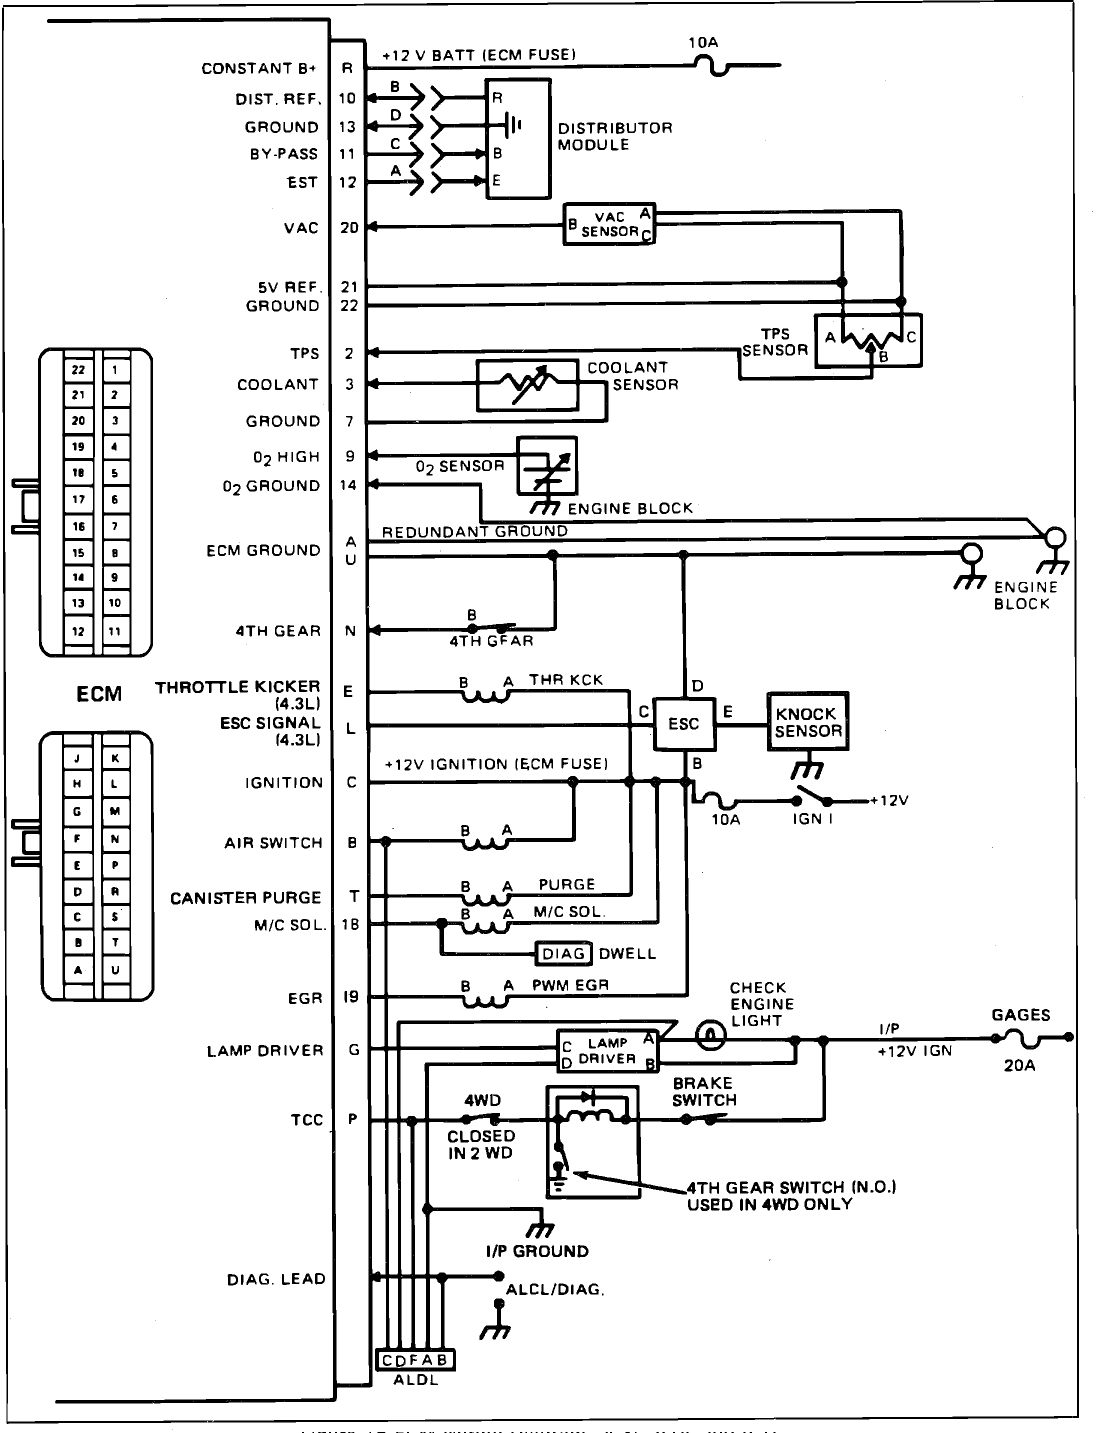 Chevy G20 Wiring Diagram - All Wiring Diagram - 1991 Chevy Truck Wiring Diagram